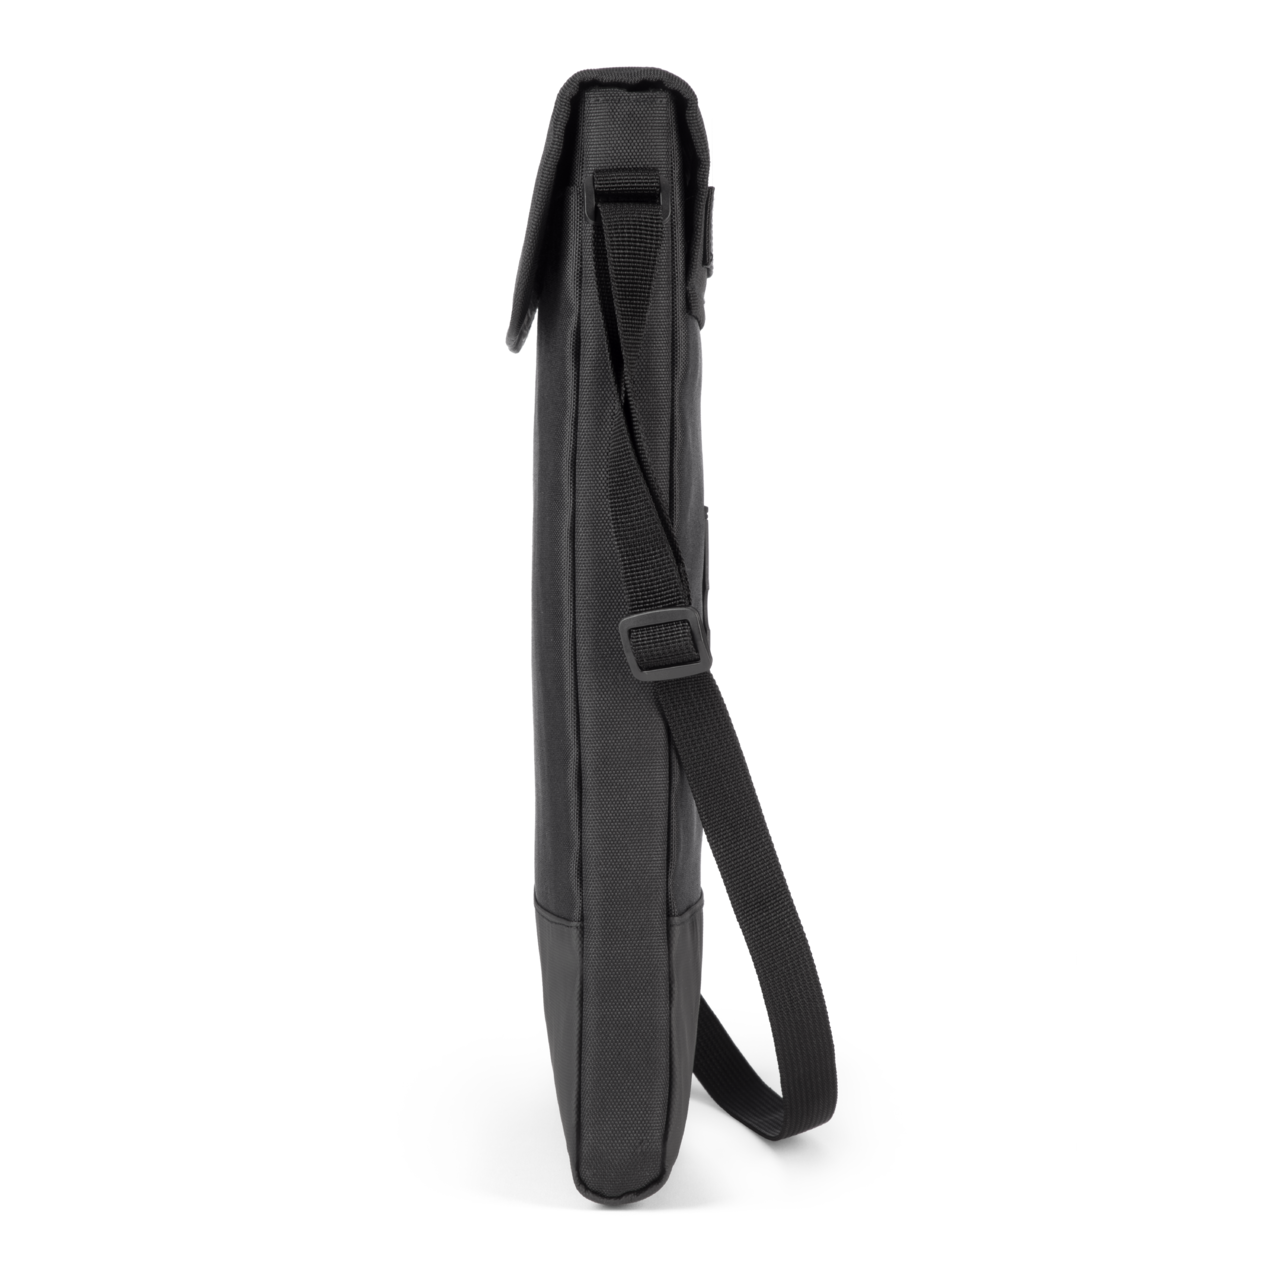 Belkin Original ‘Belkin’ Neoprene Black and Maroon Laptop Case with Shoulder Strap 